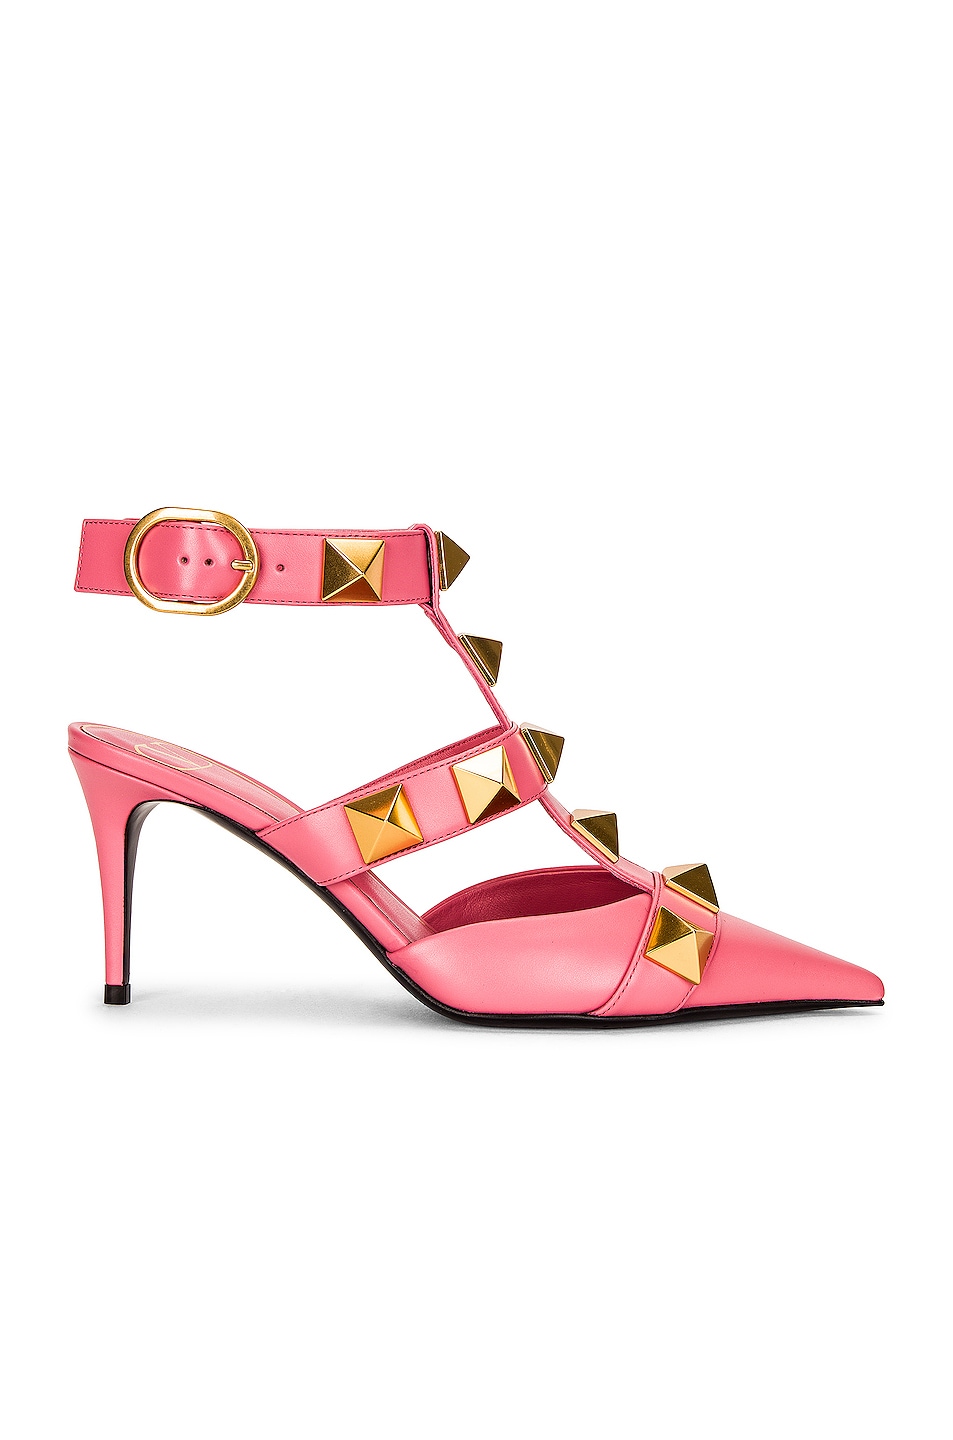 Valentino Garavani Roman Stud Ankle Strap Pumps in Flamingo Pink | FWRD